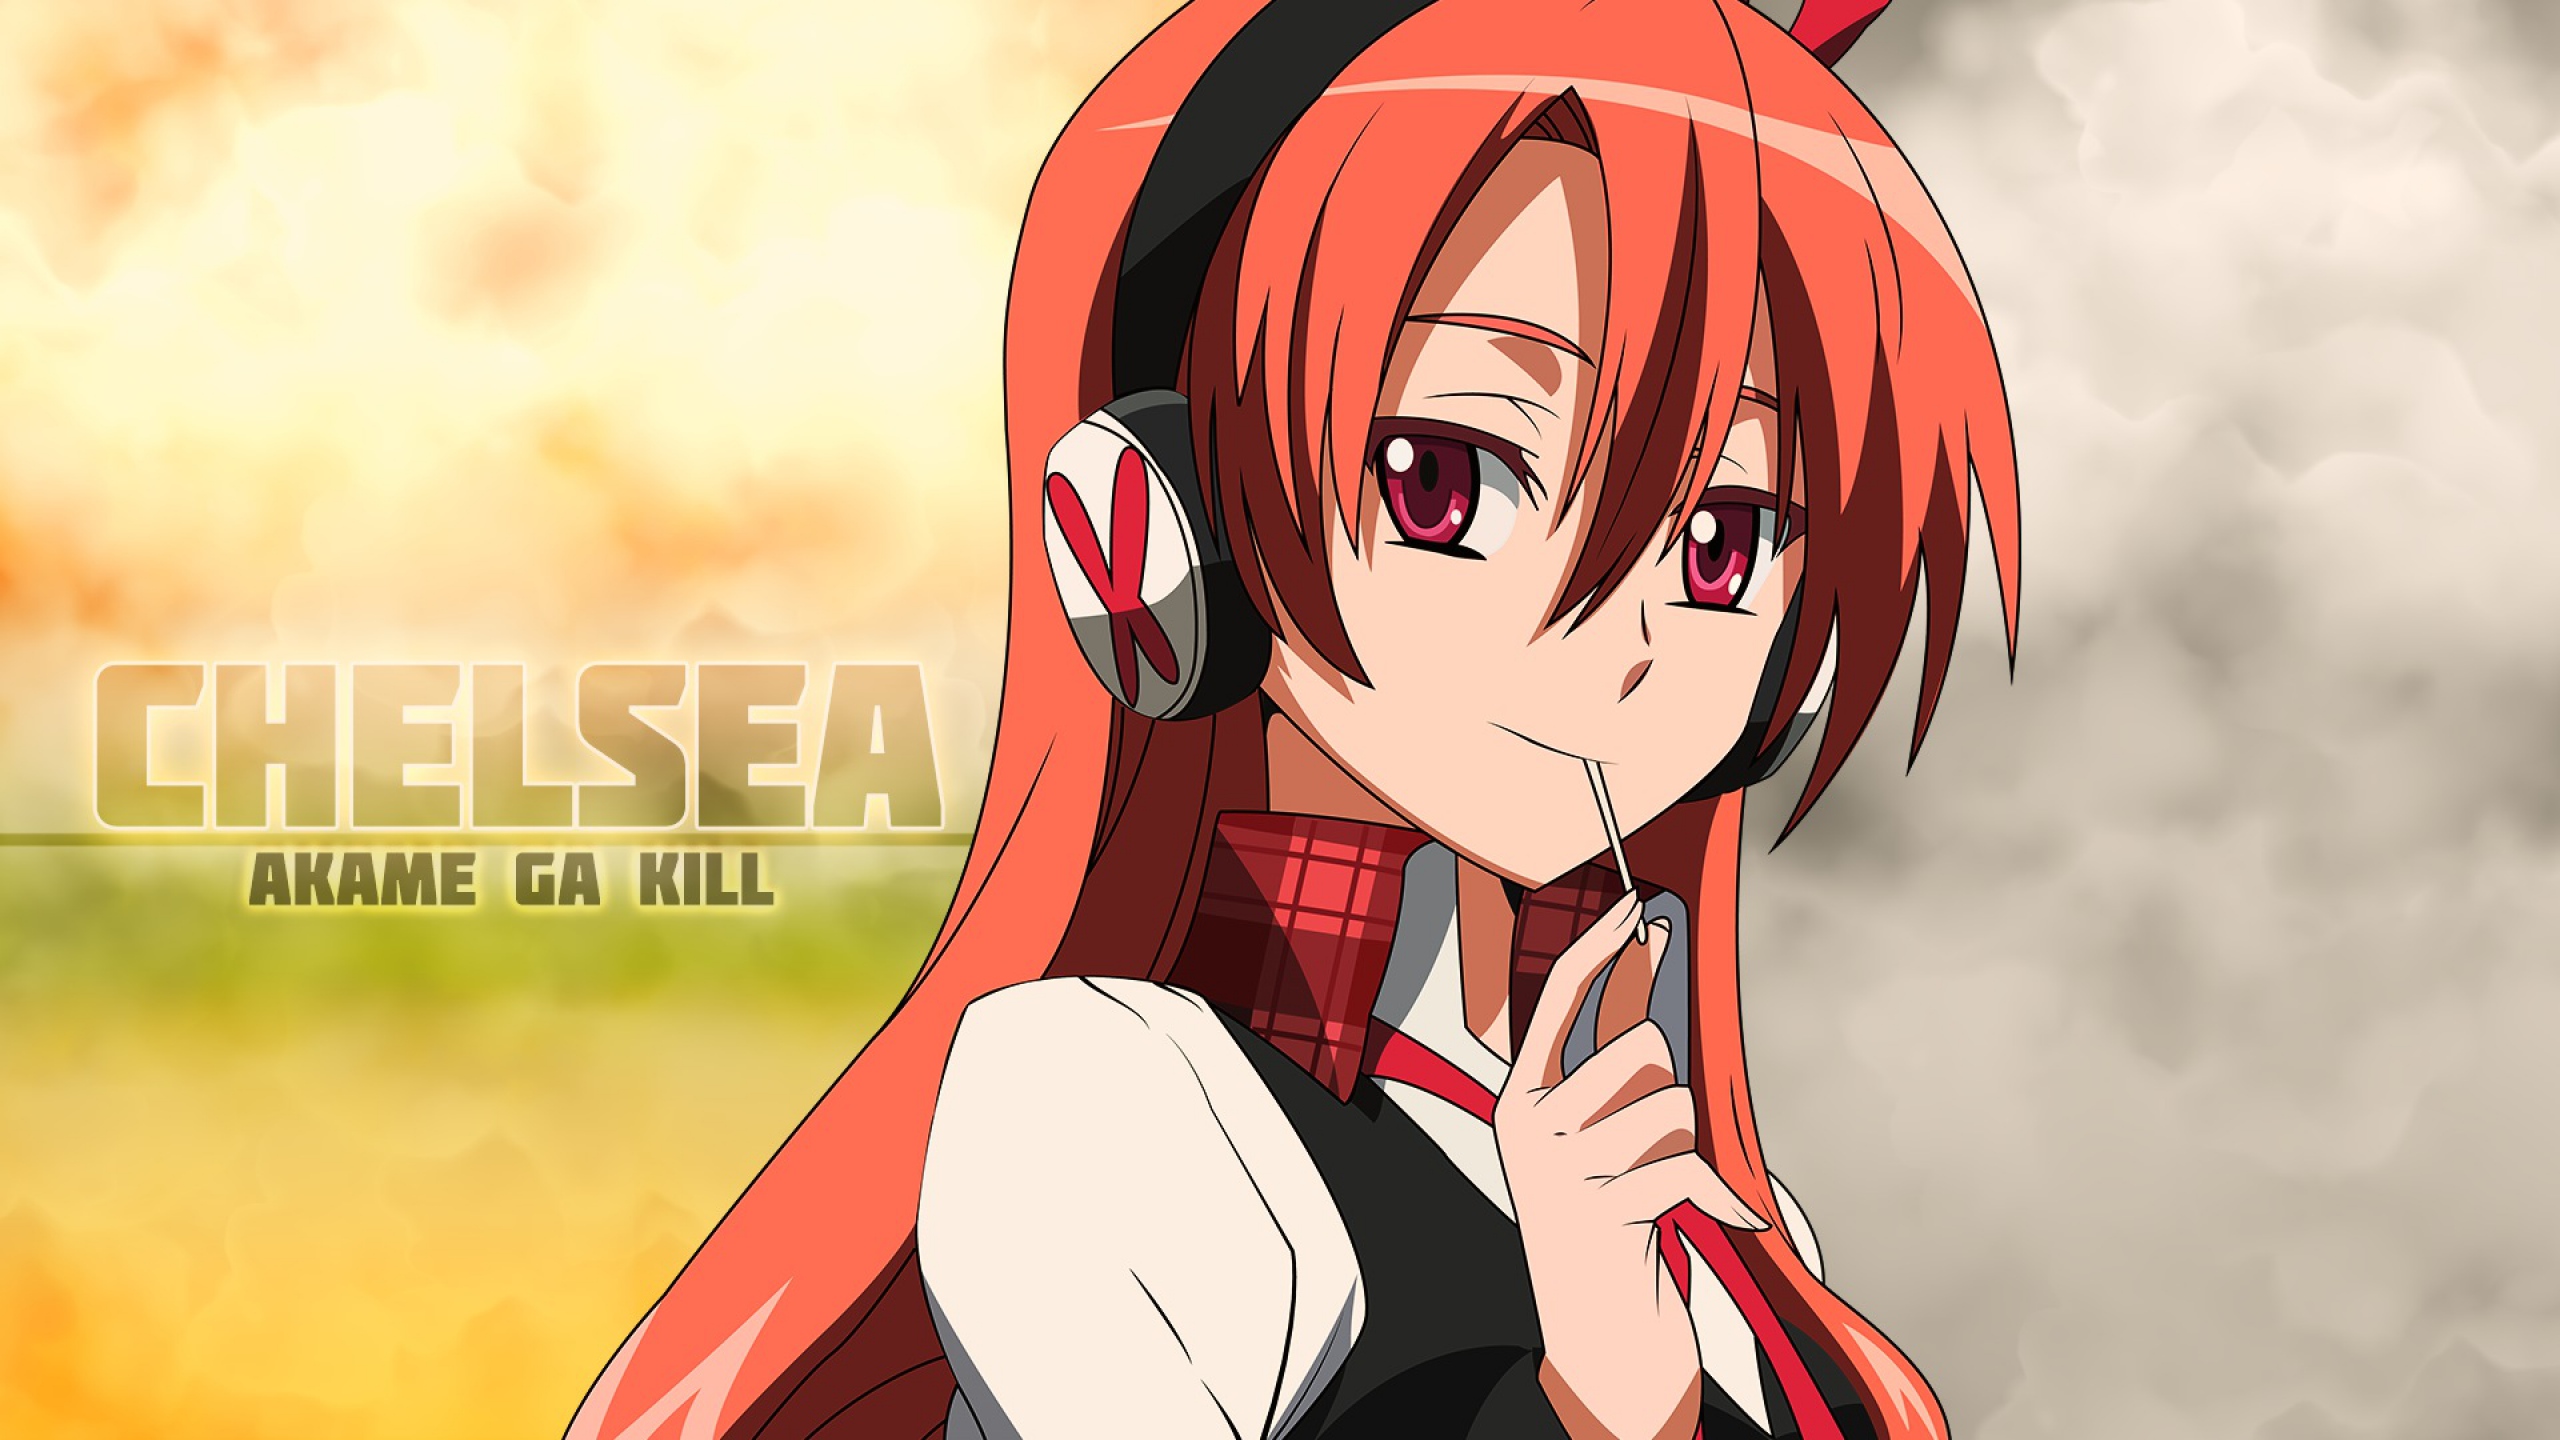 Akame Ga Kill Chelsea Akame Ga Kill 2560x1440